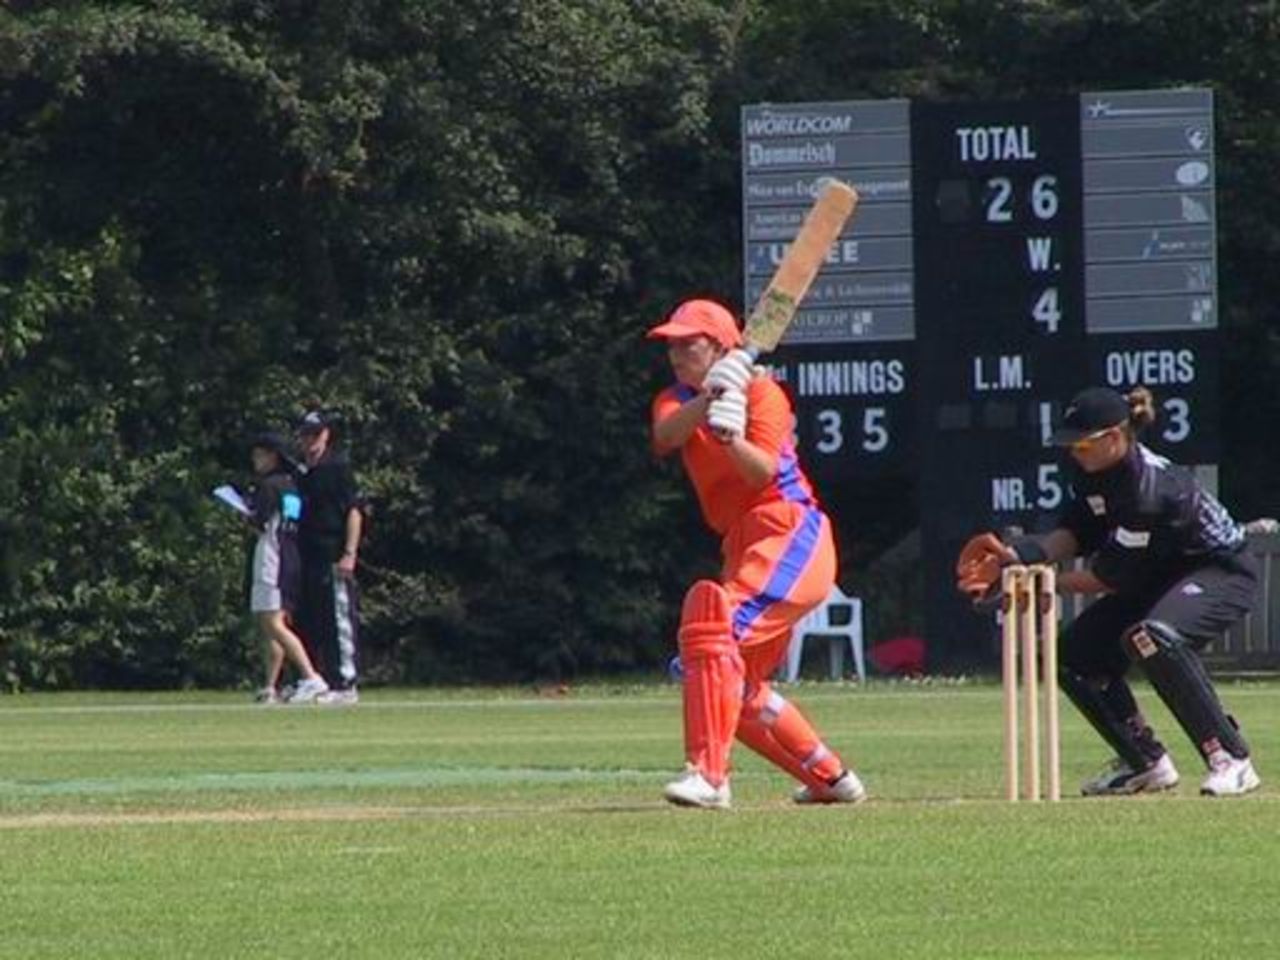 Kirsten Zorab batting against New Zealand, 26 June 2002